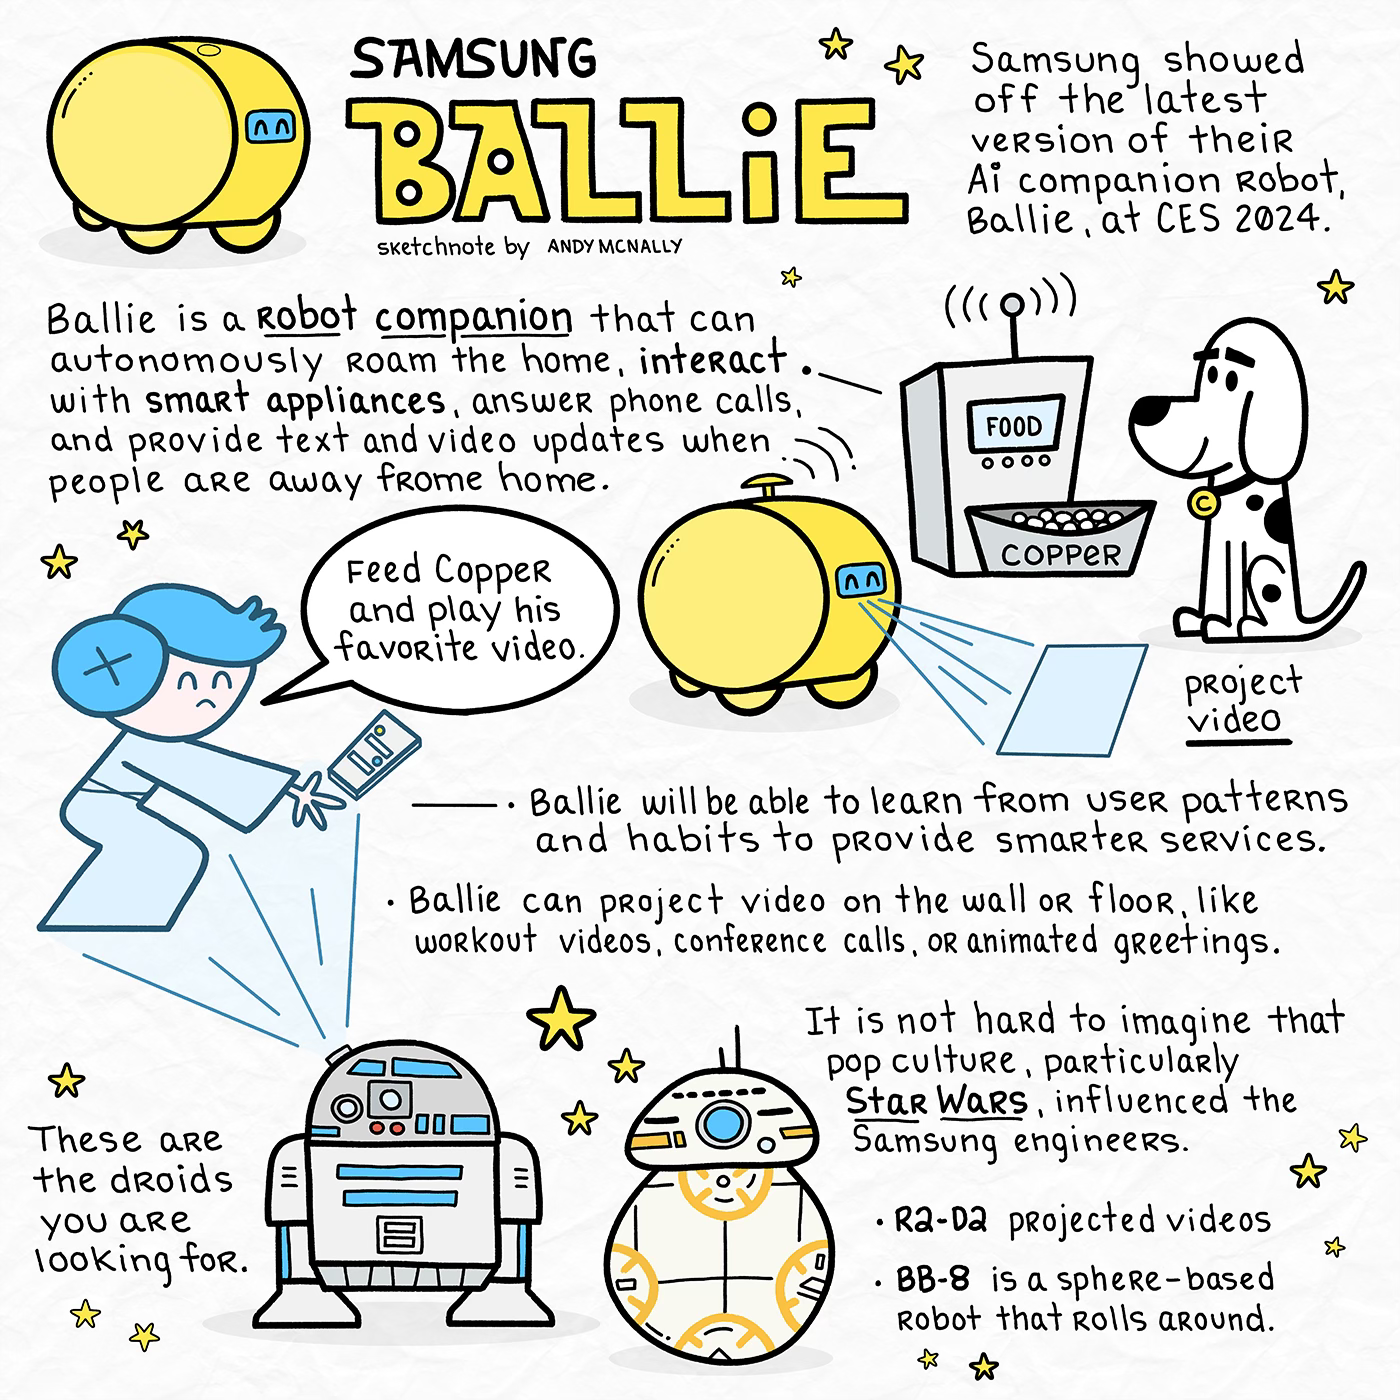 A sketchnote of the Samsung Ballie AI companion.